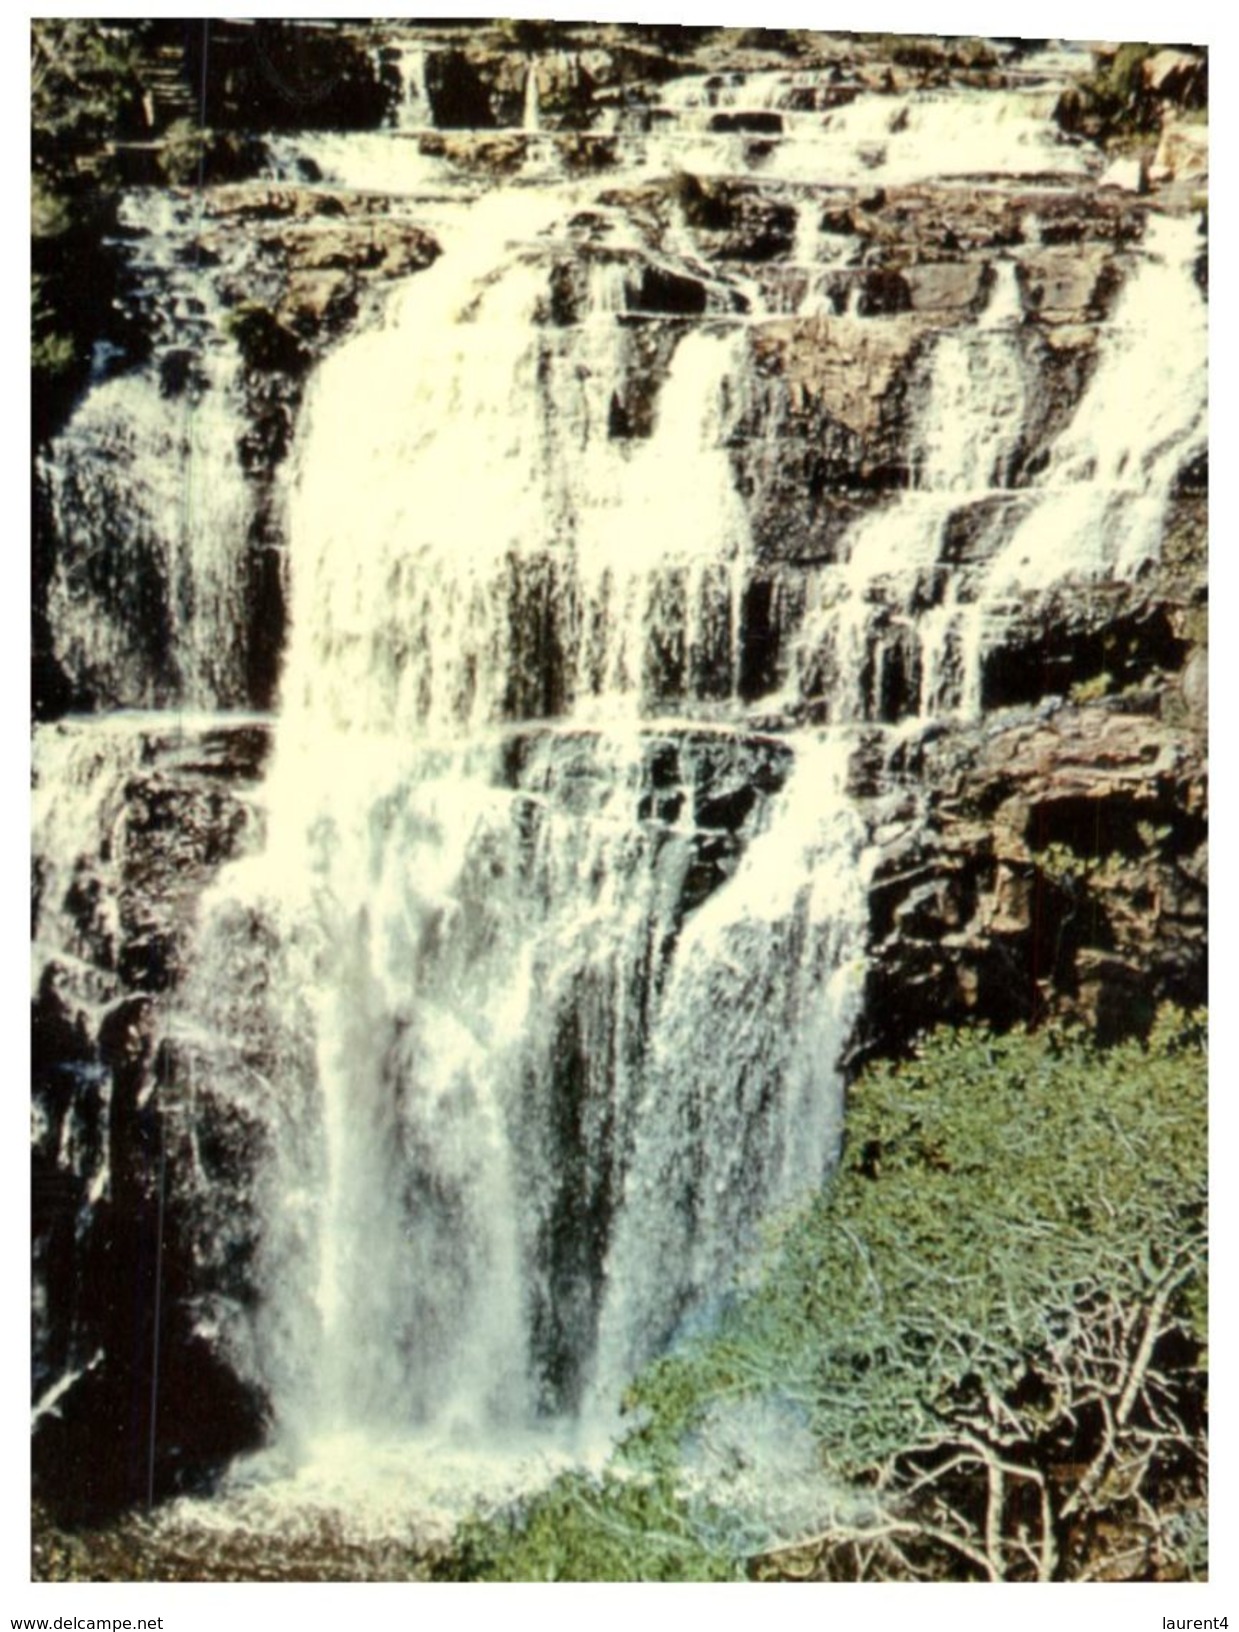 (270) Australia - VIC - McKenzier Falls - Grampians